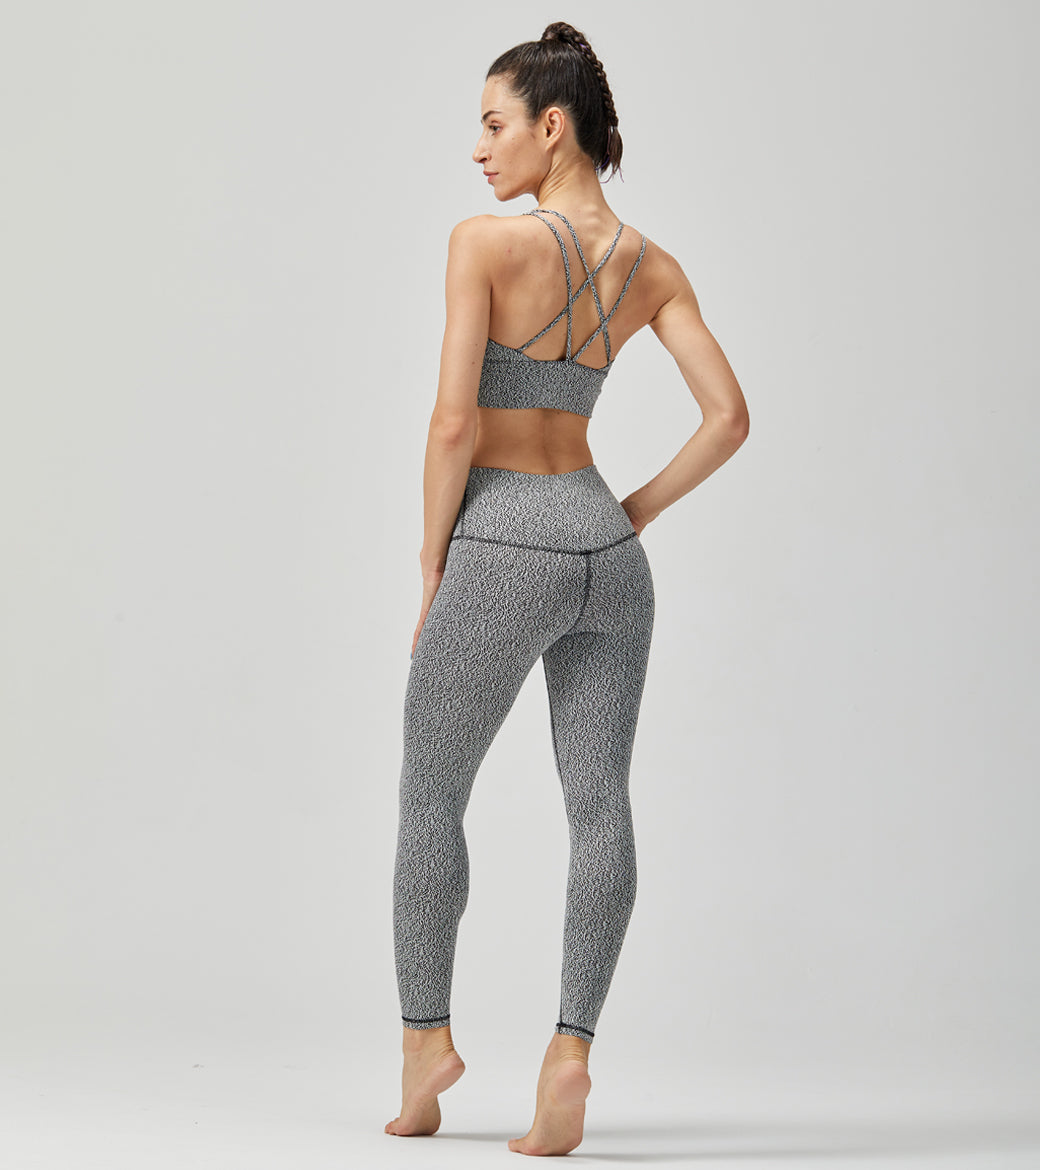 LOVESOFT Women's jacquard gym running hip-lifting yoga pants